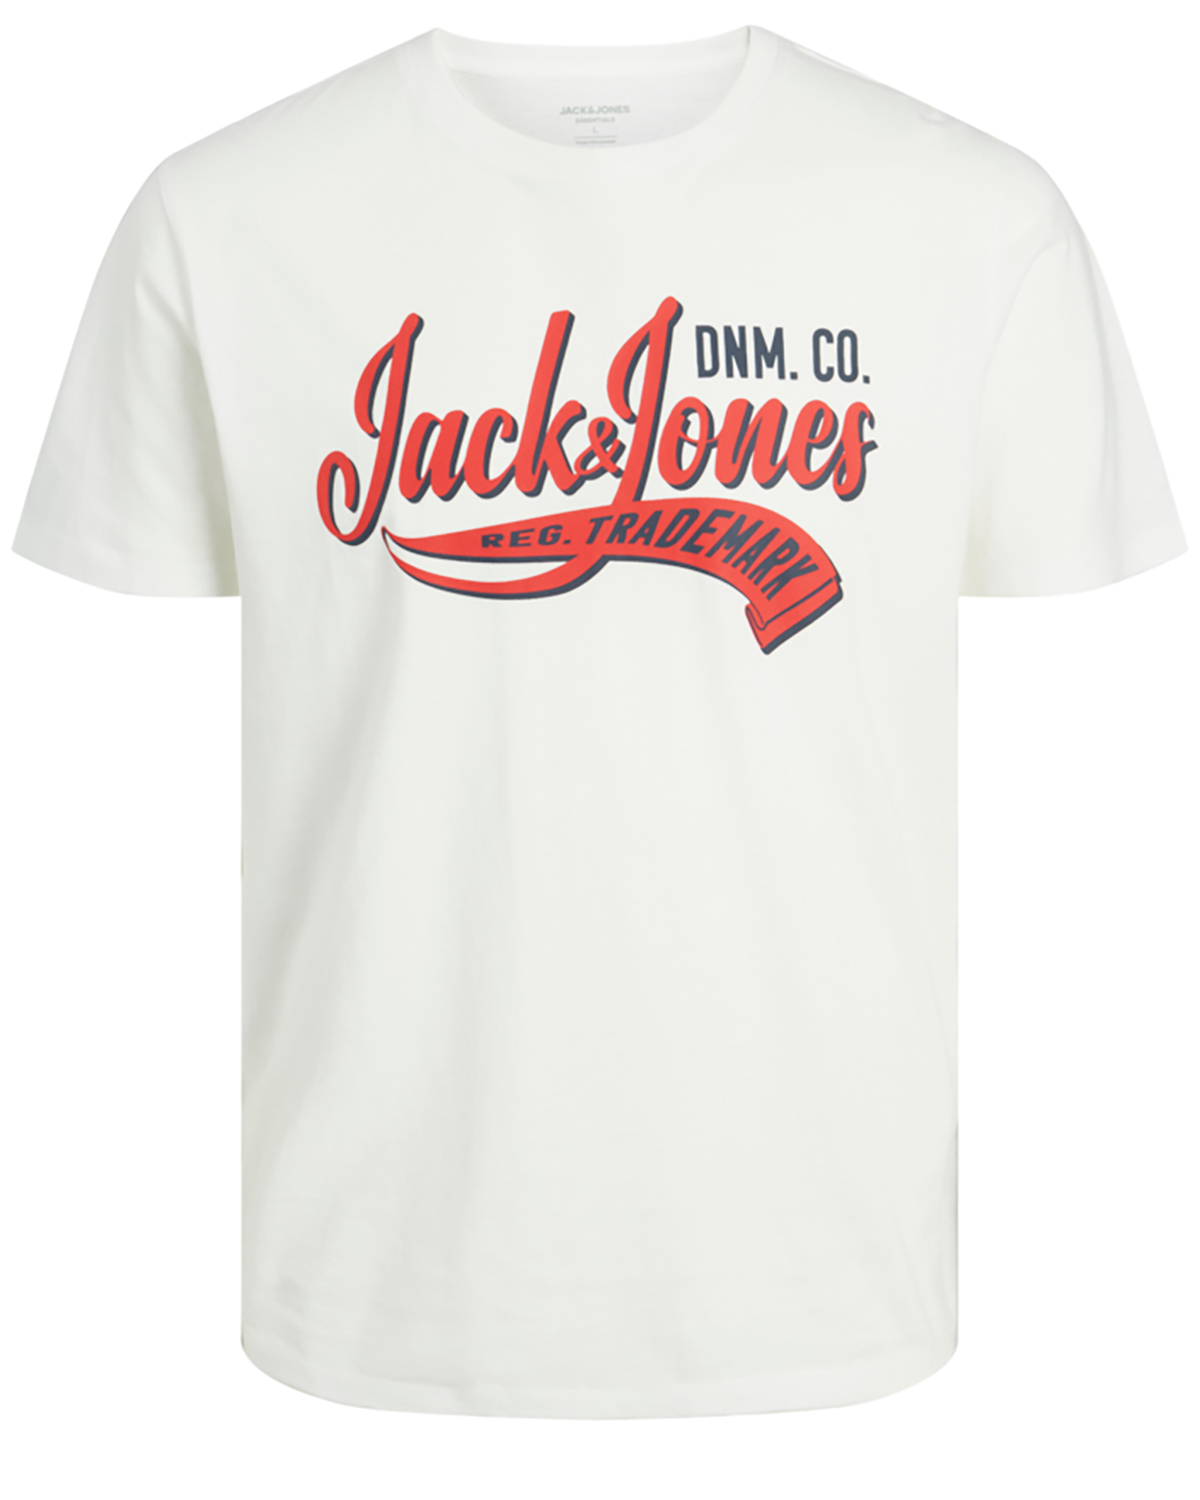 Se Jack & Jones JR t-shirt s/s, Logo tee, hvid - 176 - 16år hos Umame.dk